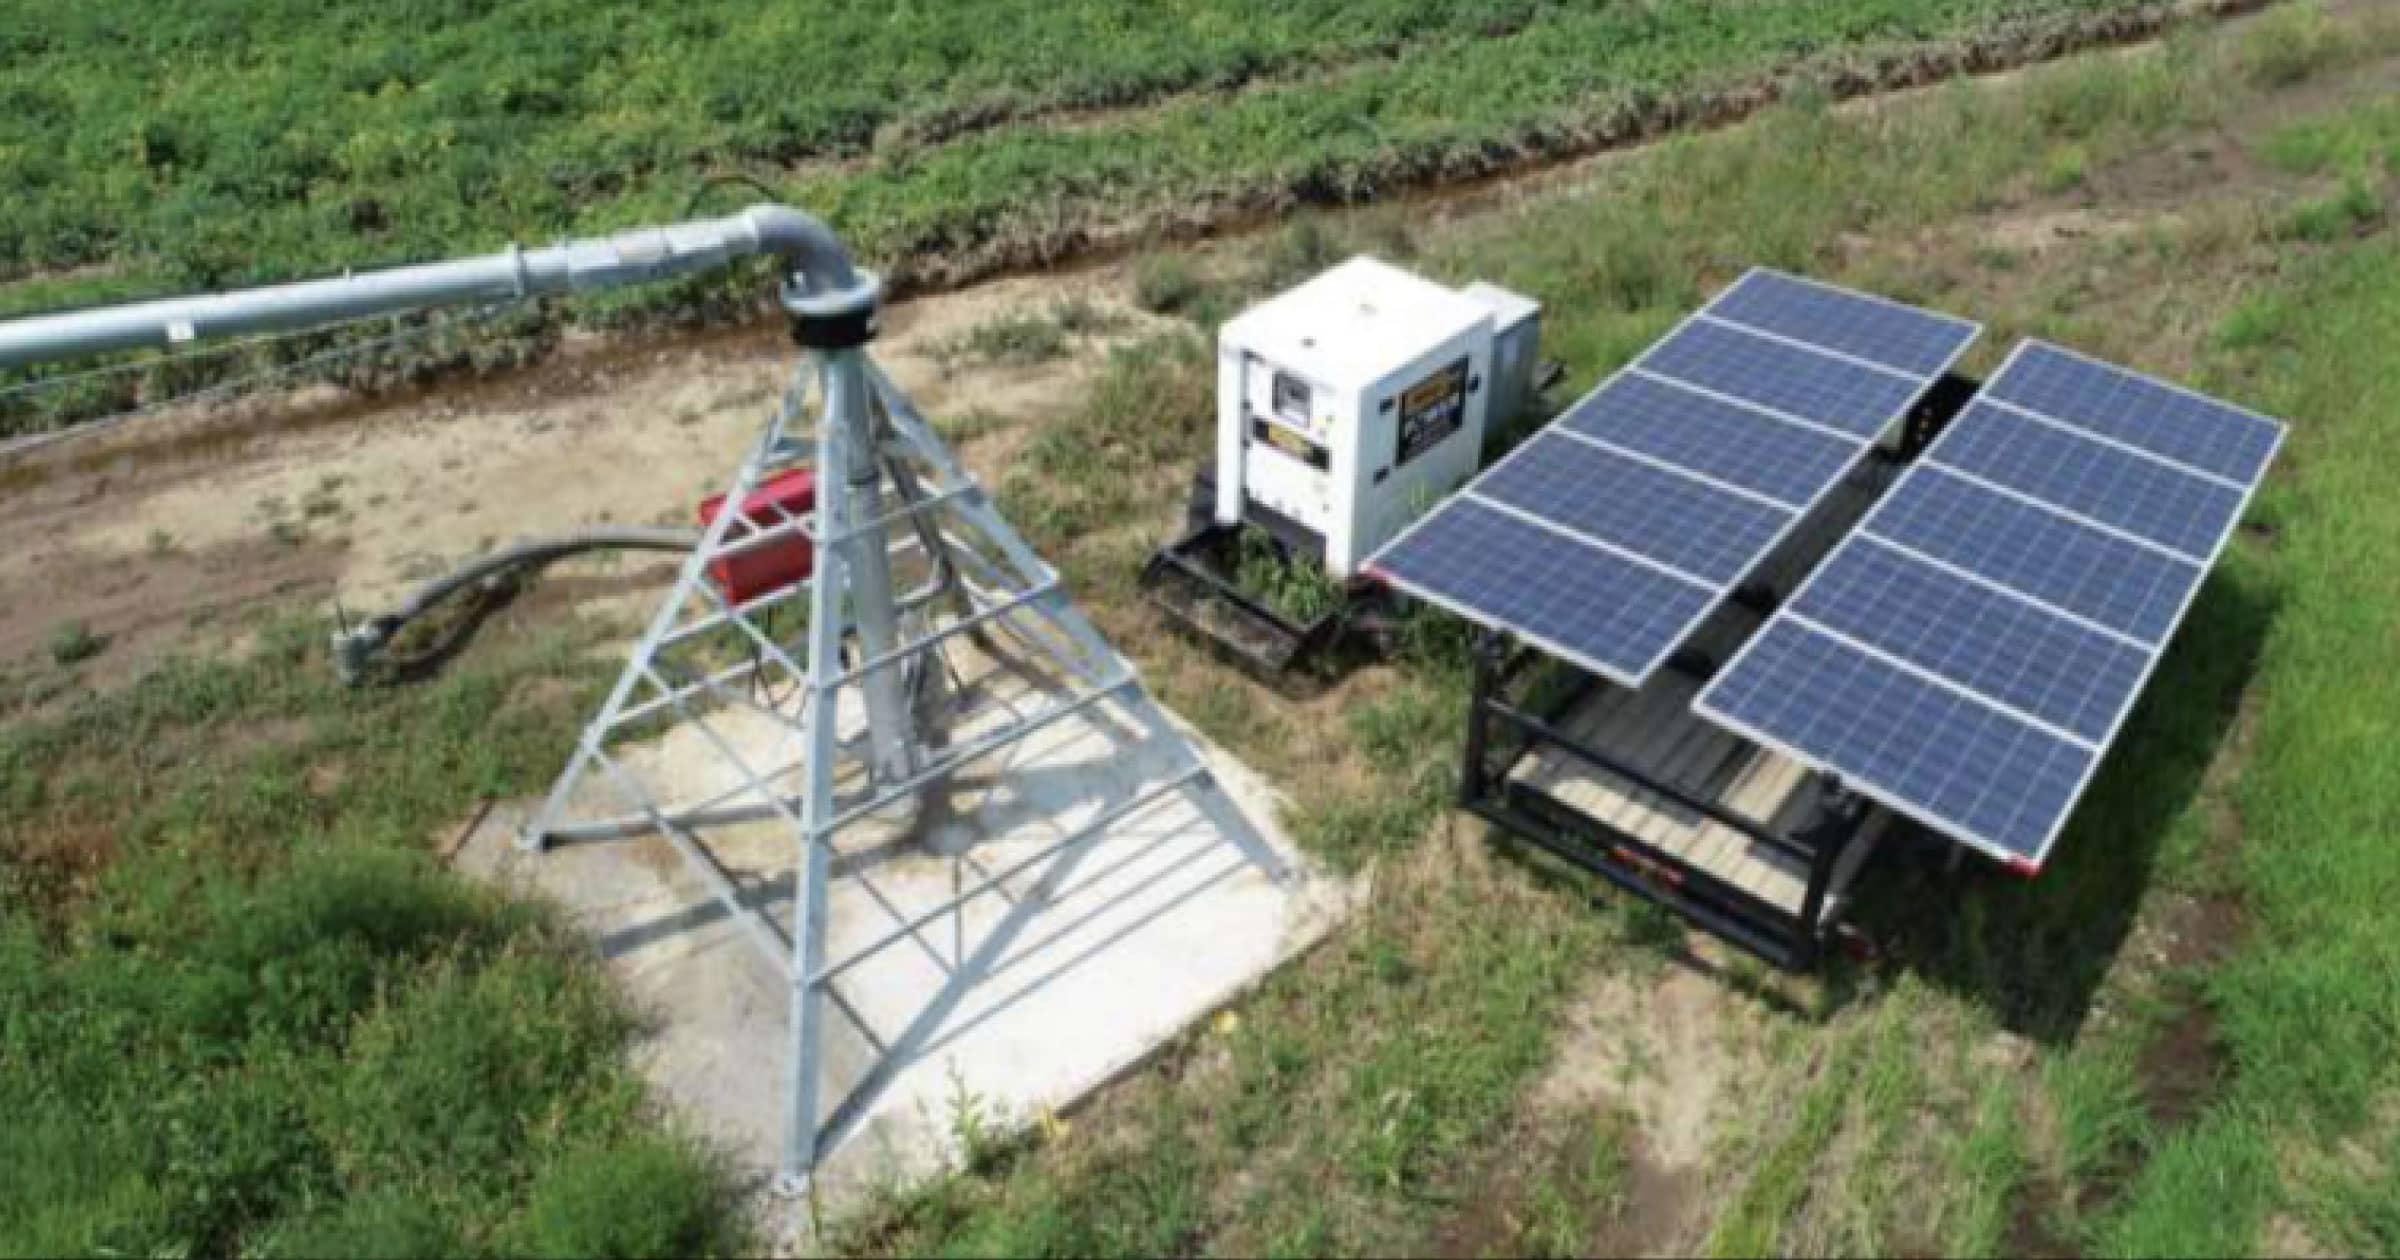 Solar hybrid energy storage system powers irrigation that aides in potato farm production